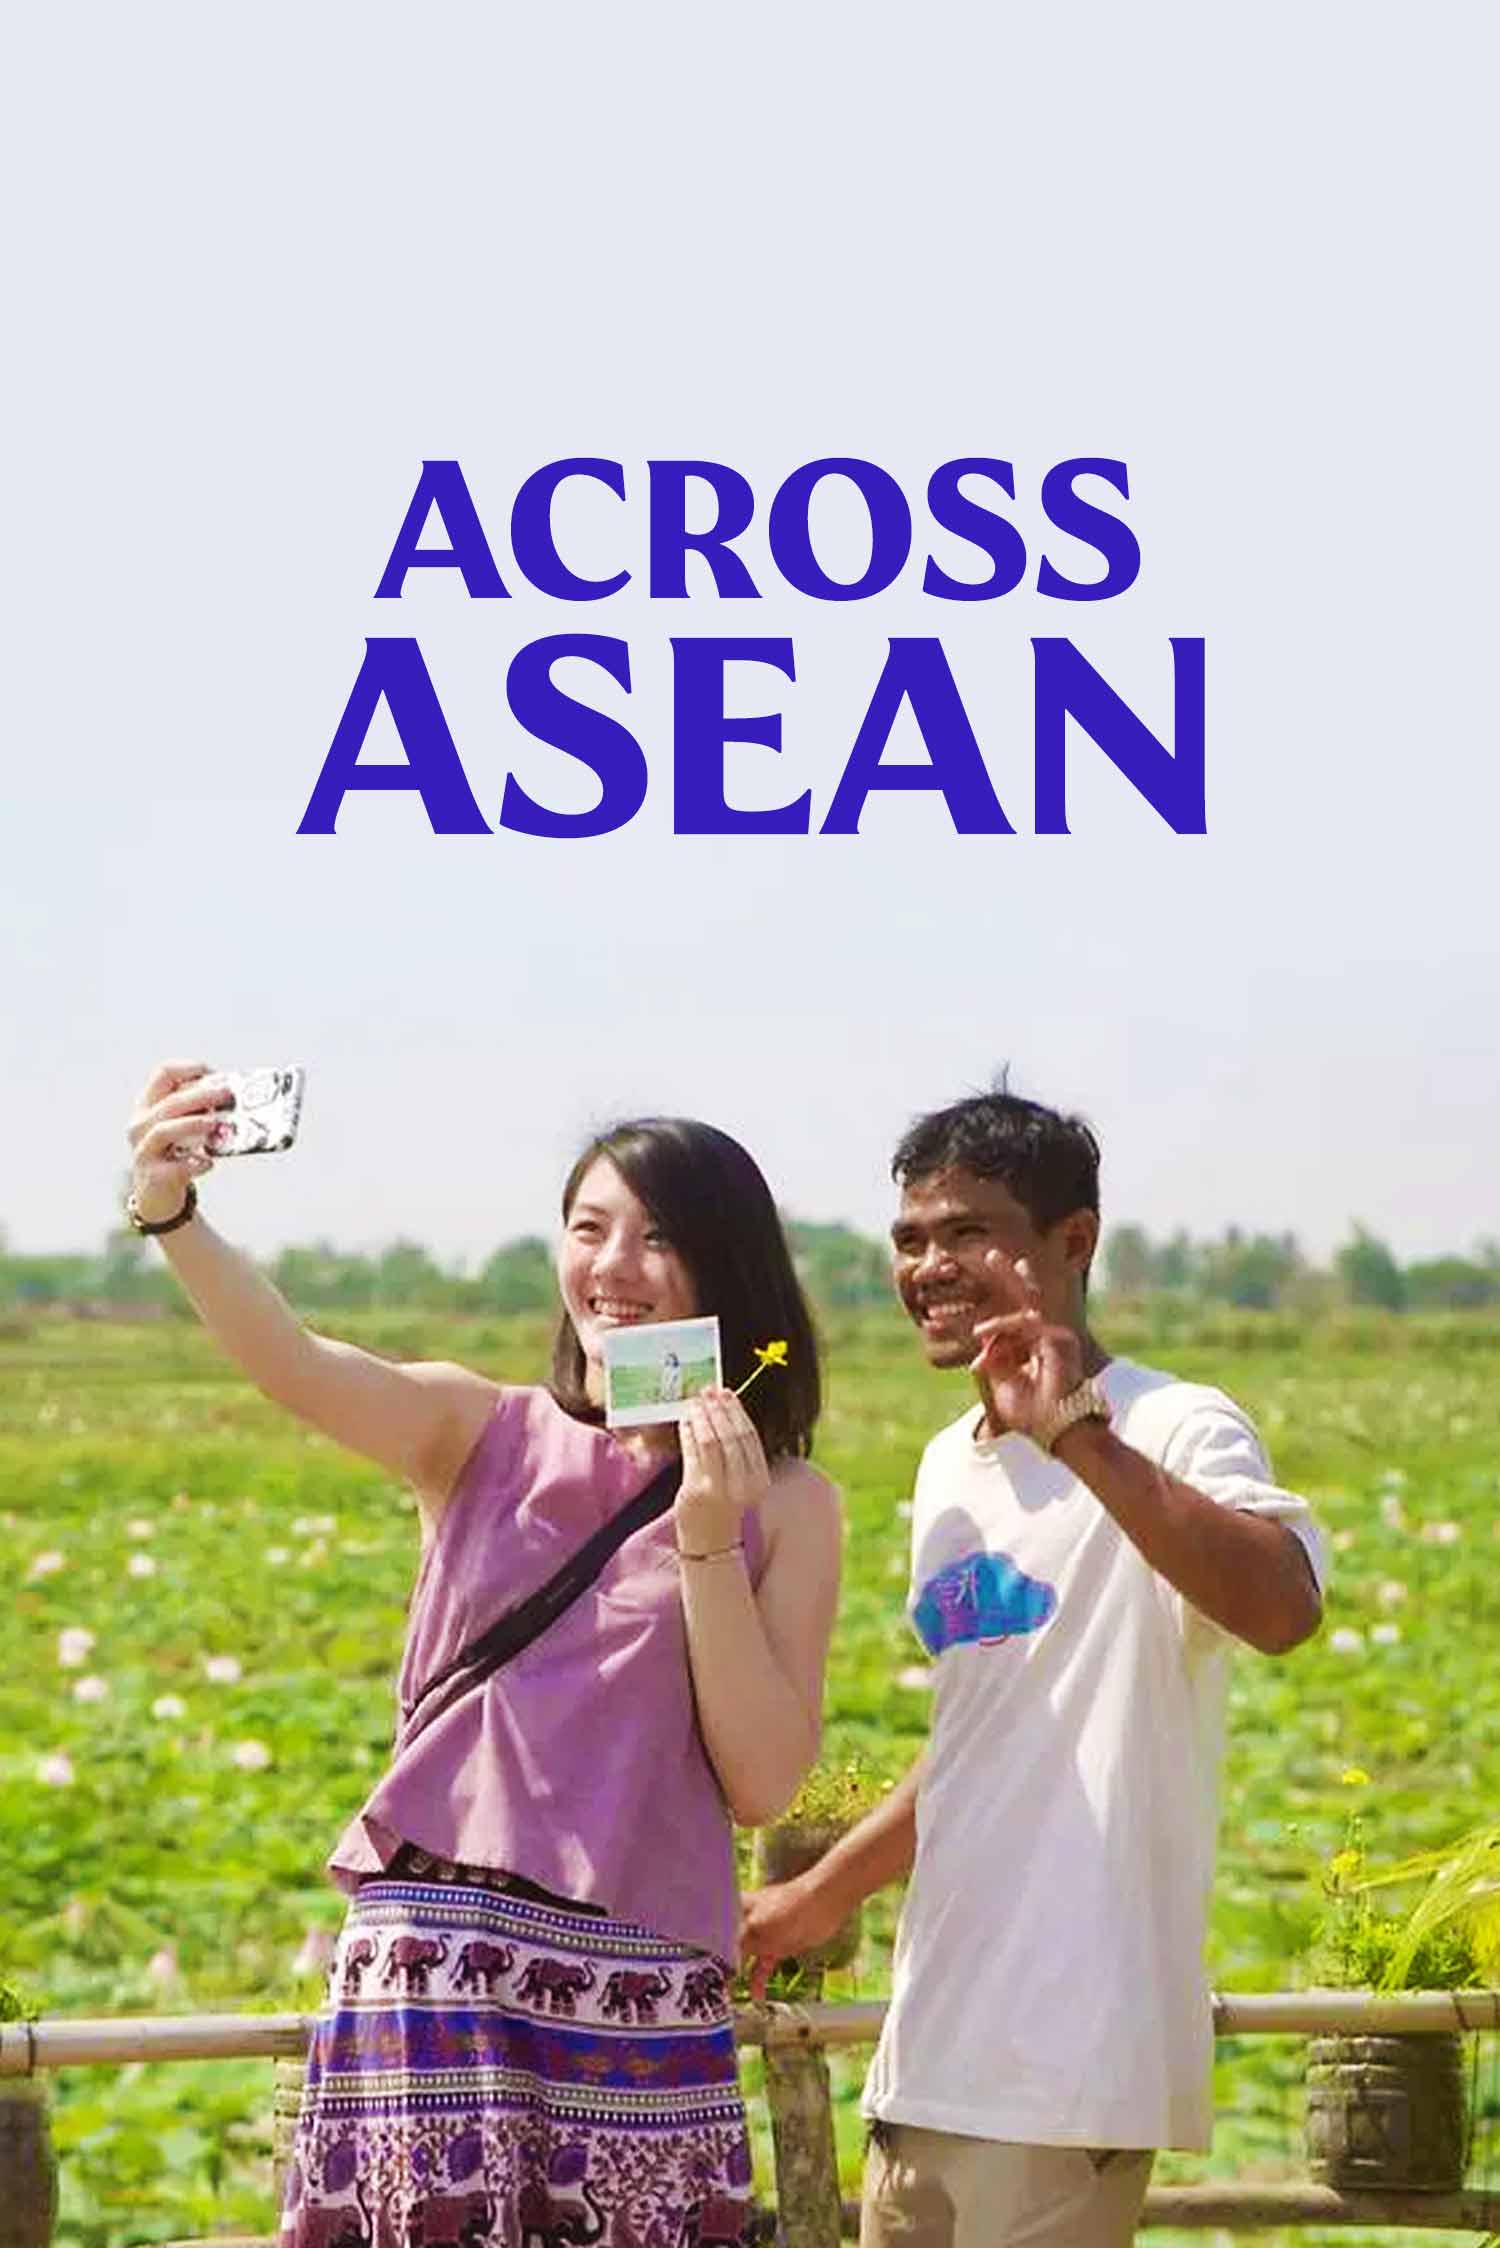 Across ASEAN